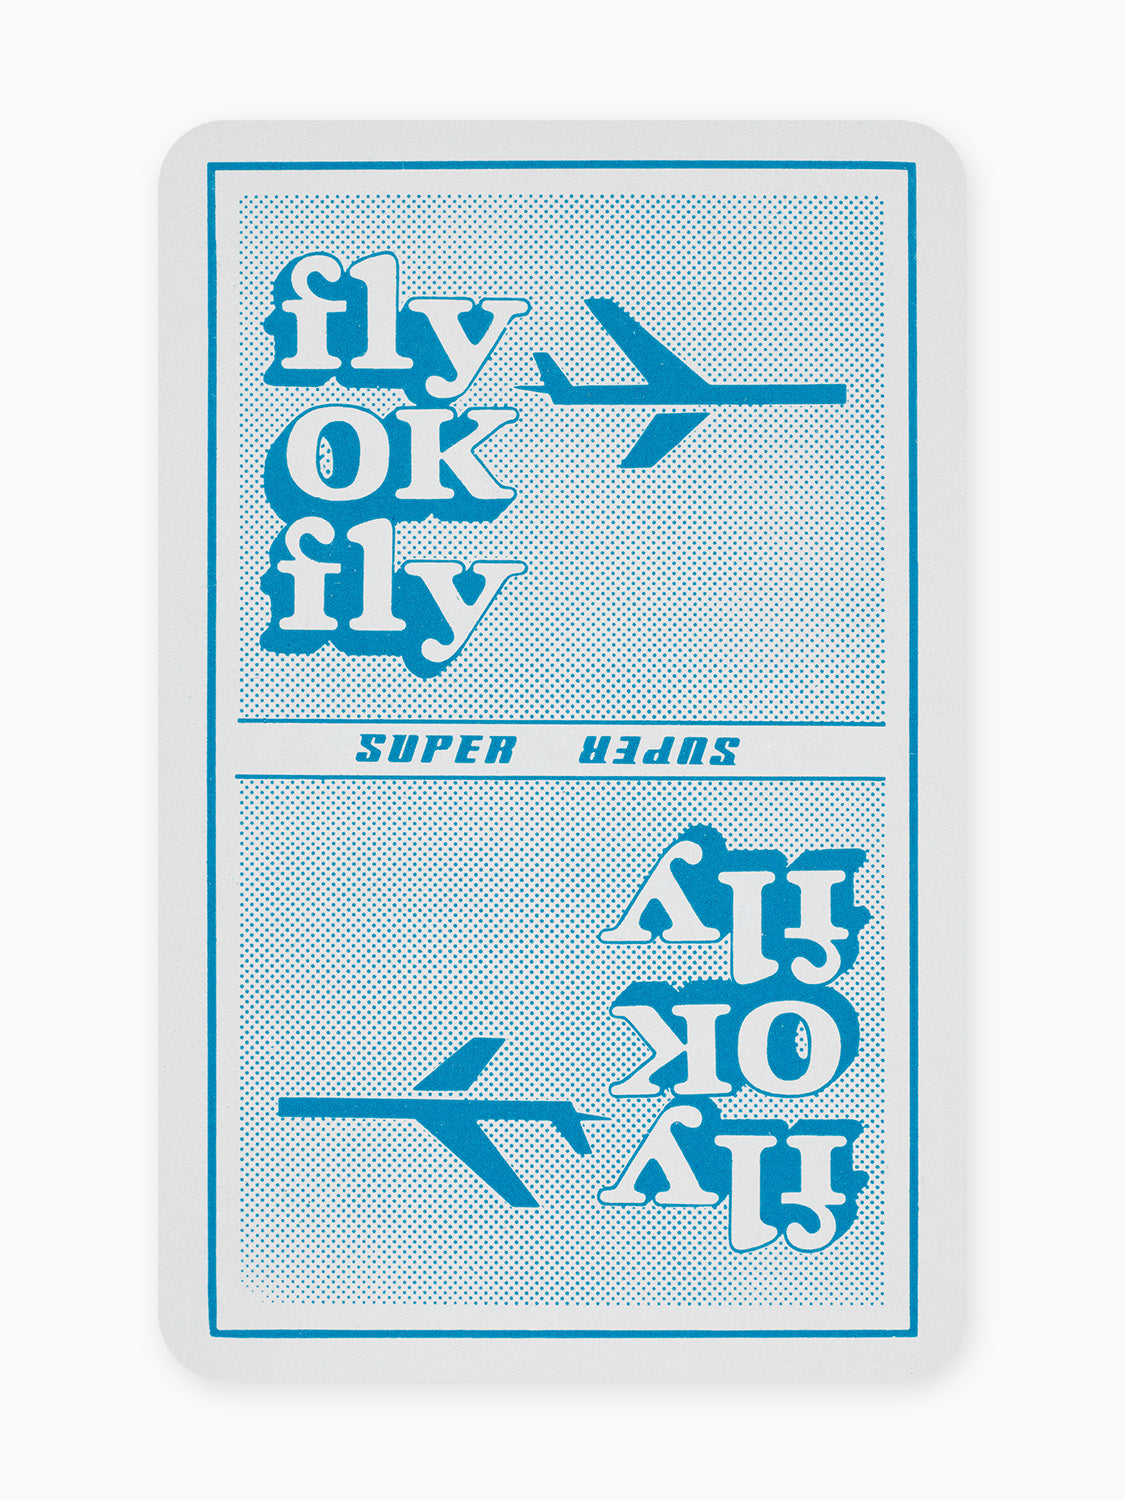 fly OK fly SUPER